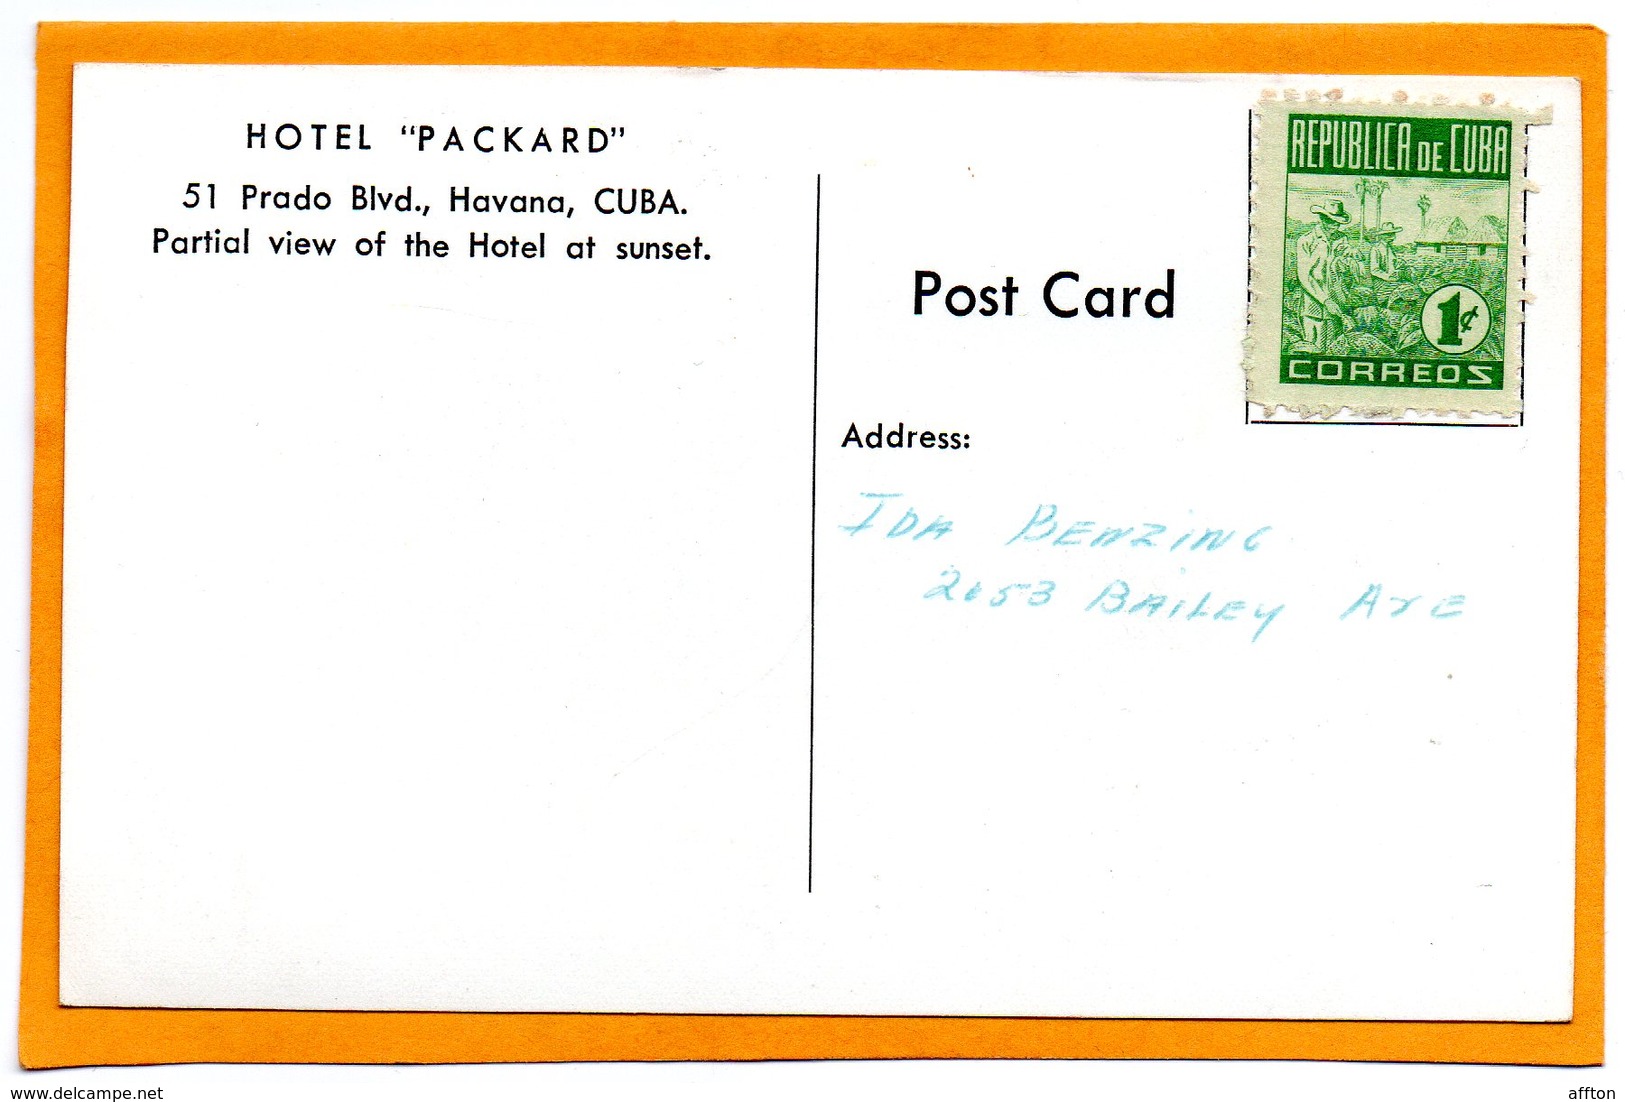 Havana Hotel Packard Cuba 1950 Real Photo Postcard - Cuba